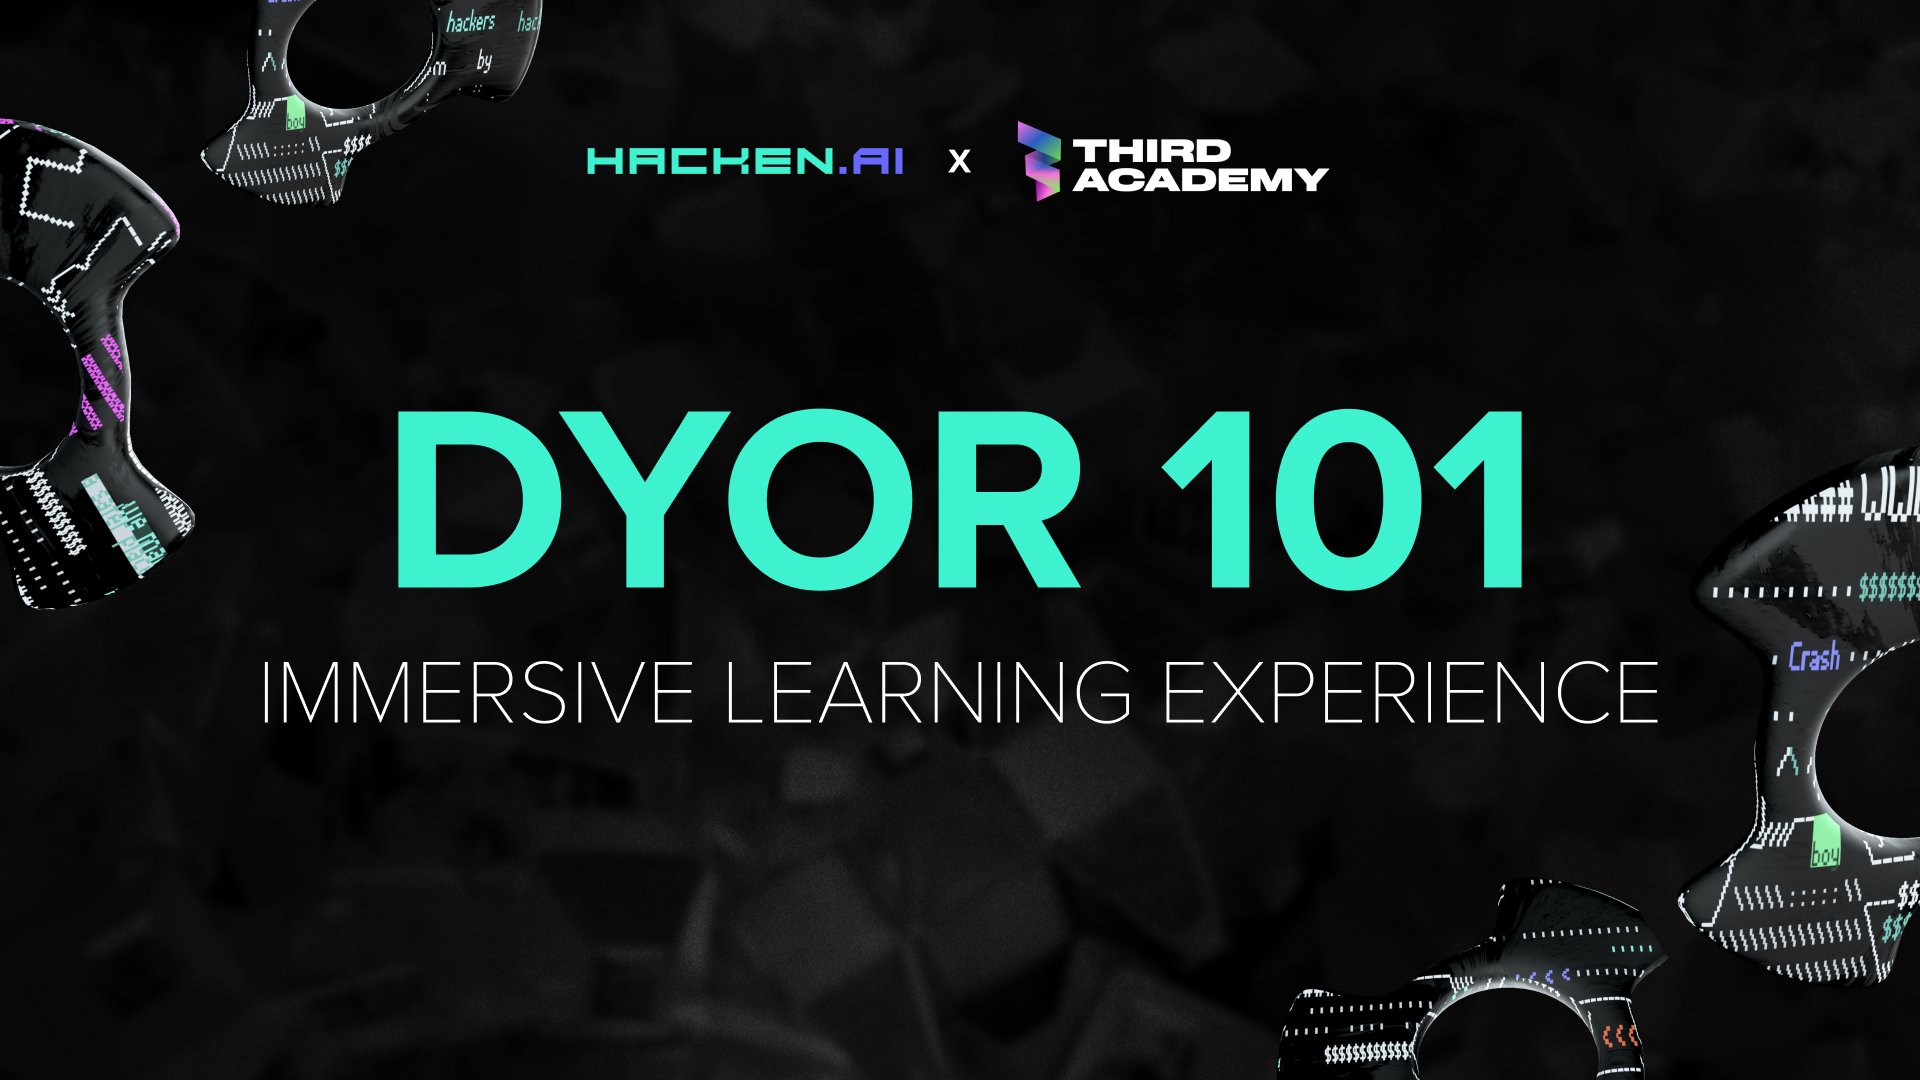 Third Academy Integrates DYOR 101 Course into Its Educational Platform